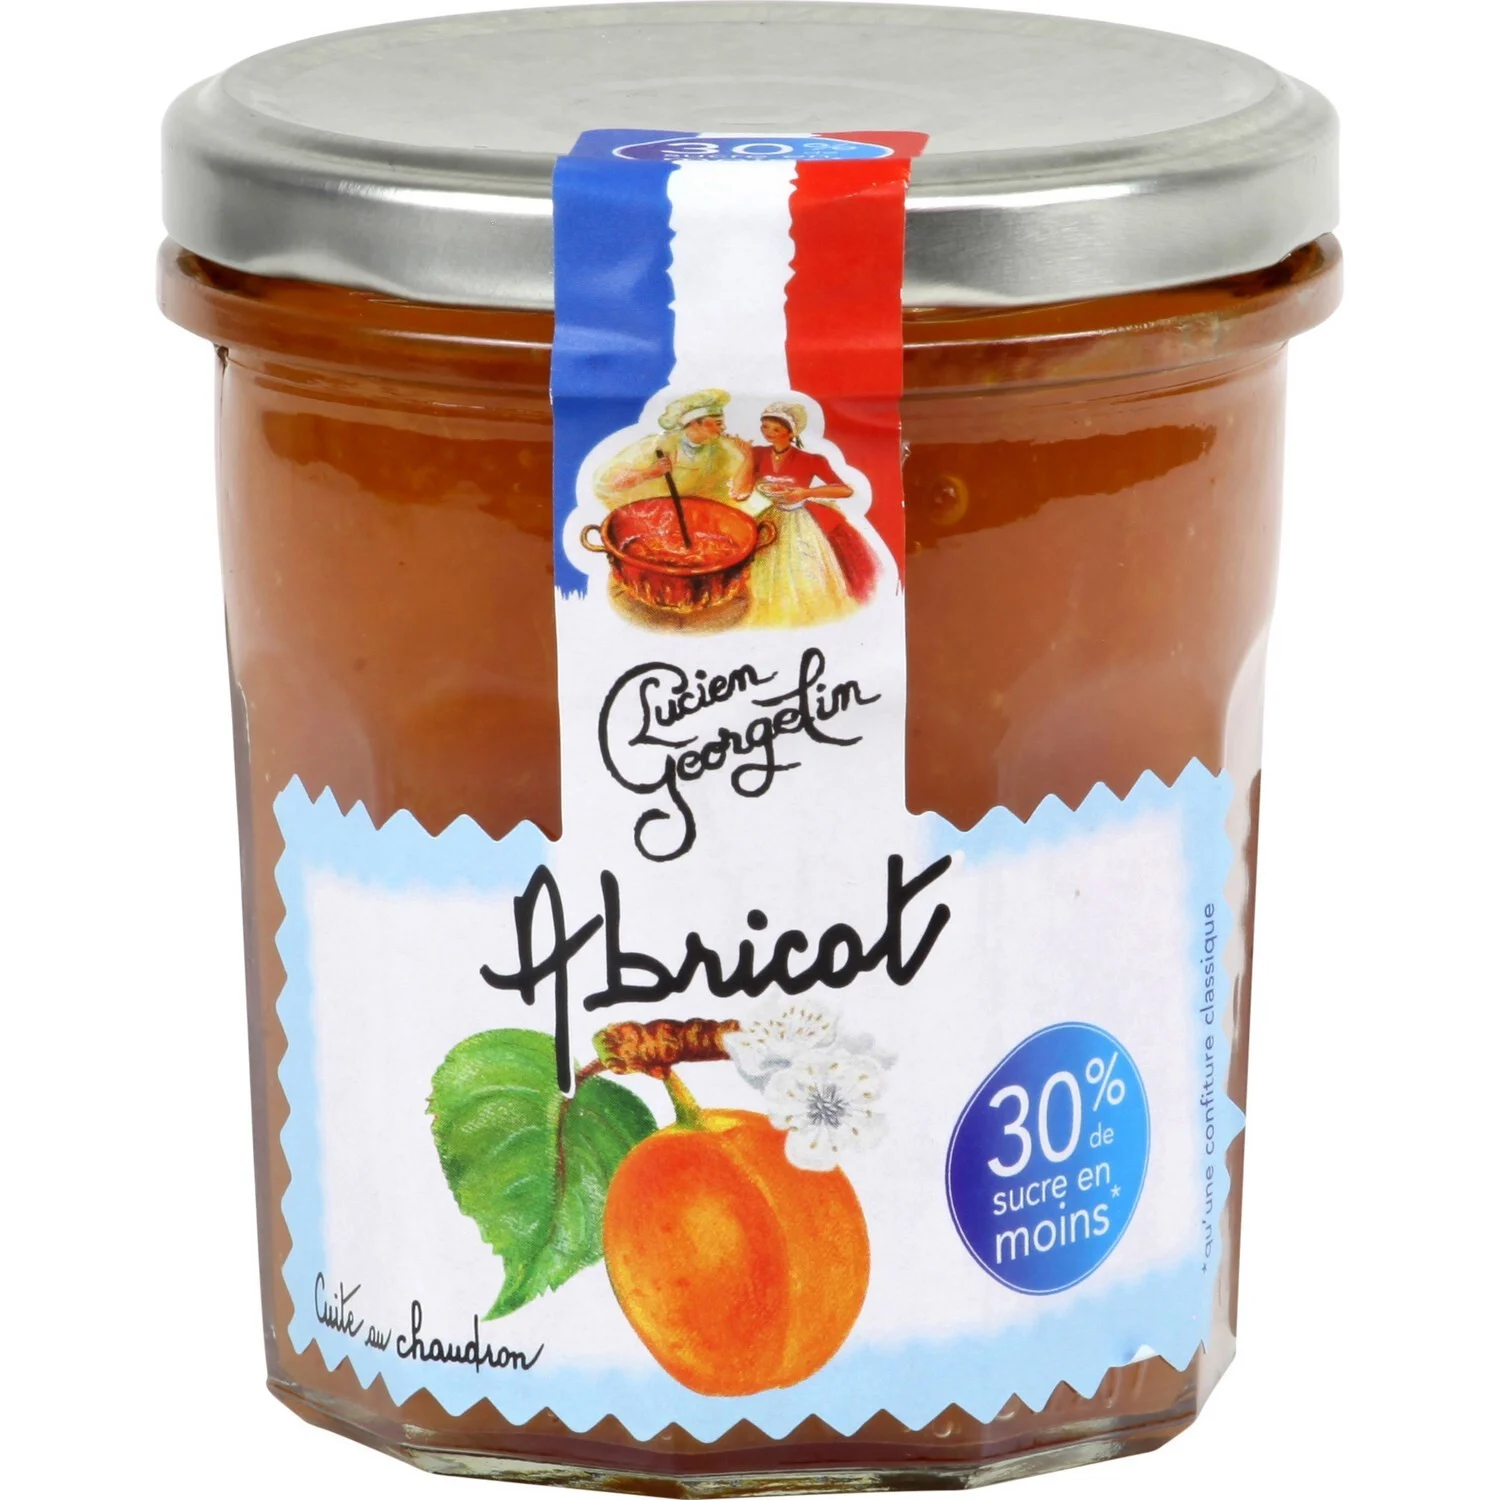 Gourmet- und leichte Aprikosenmarmelade
Goldmedaille beim Concours Général Agricole de Paris 2019 320g - LUCIEN GEORGELIN